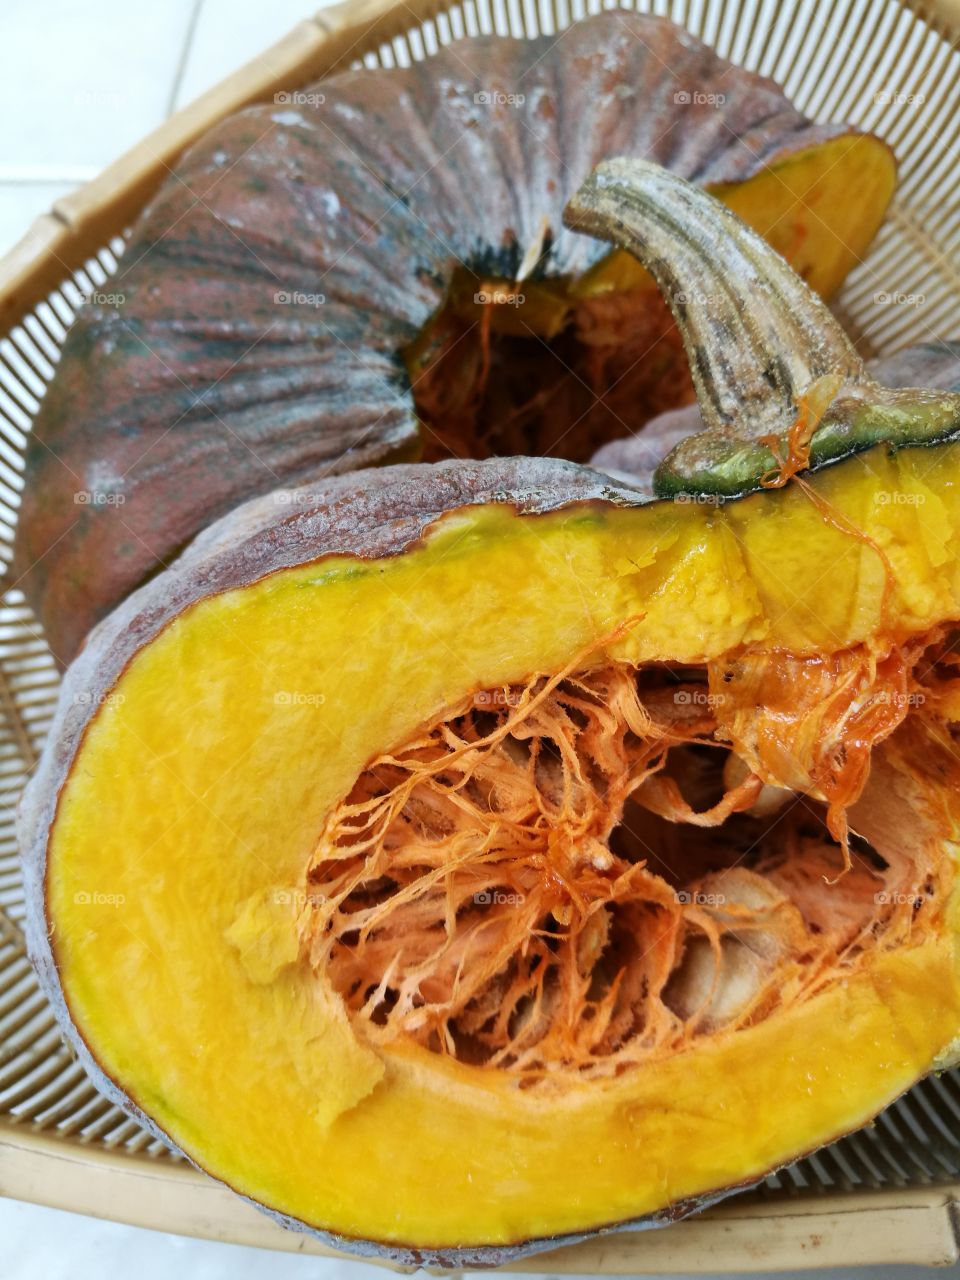 Closeup of pieces of pumpkin in a basket.